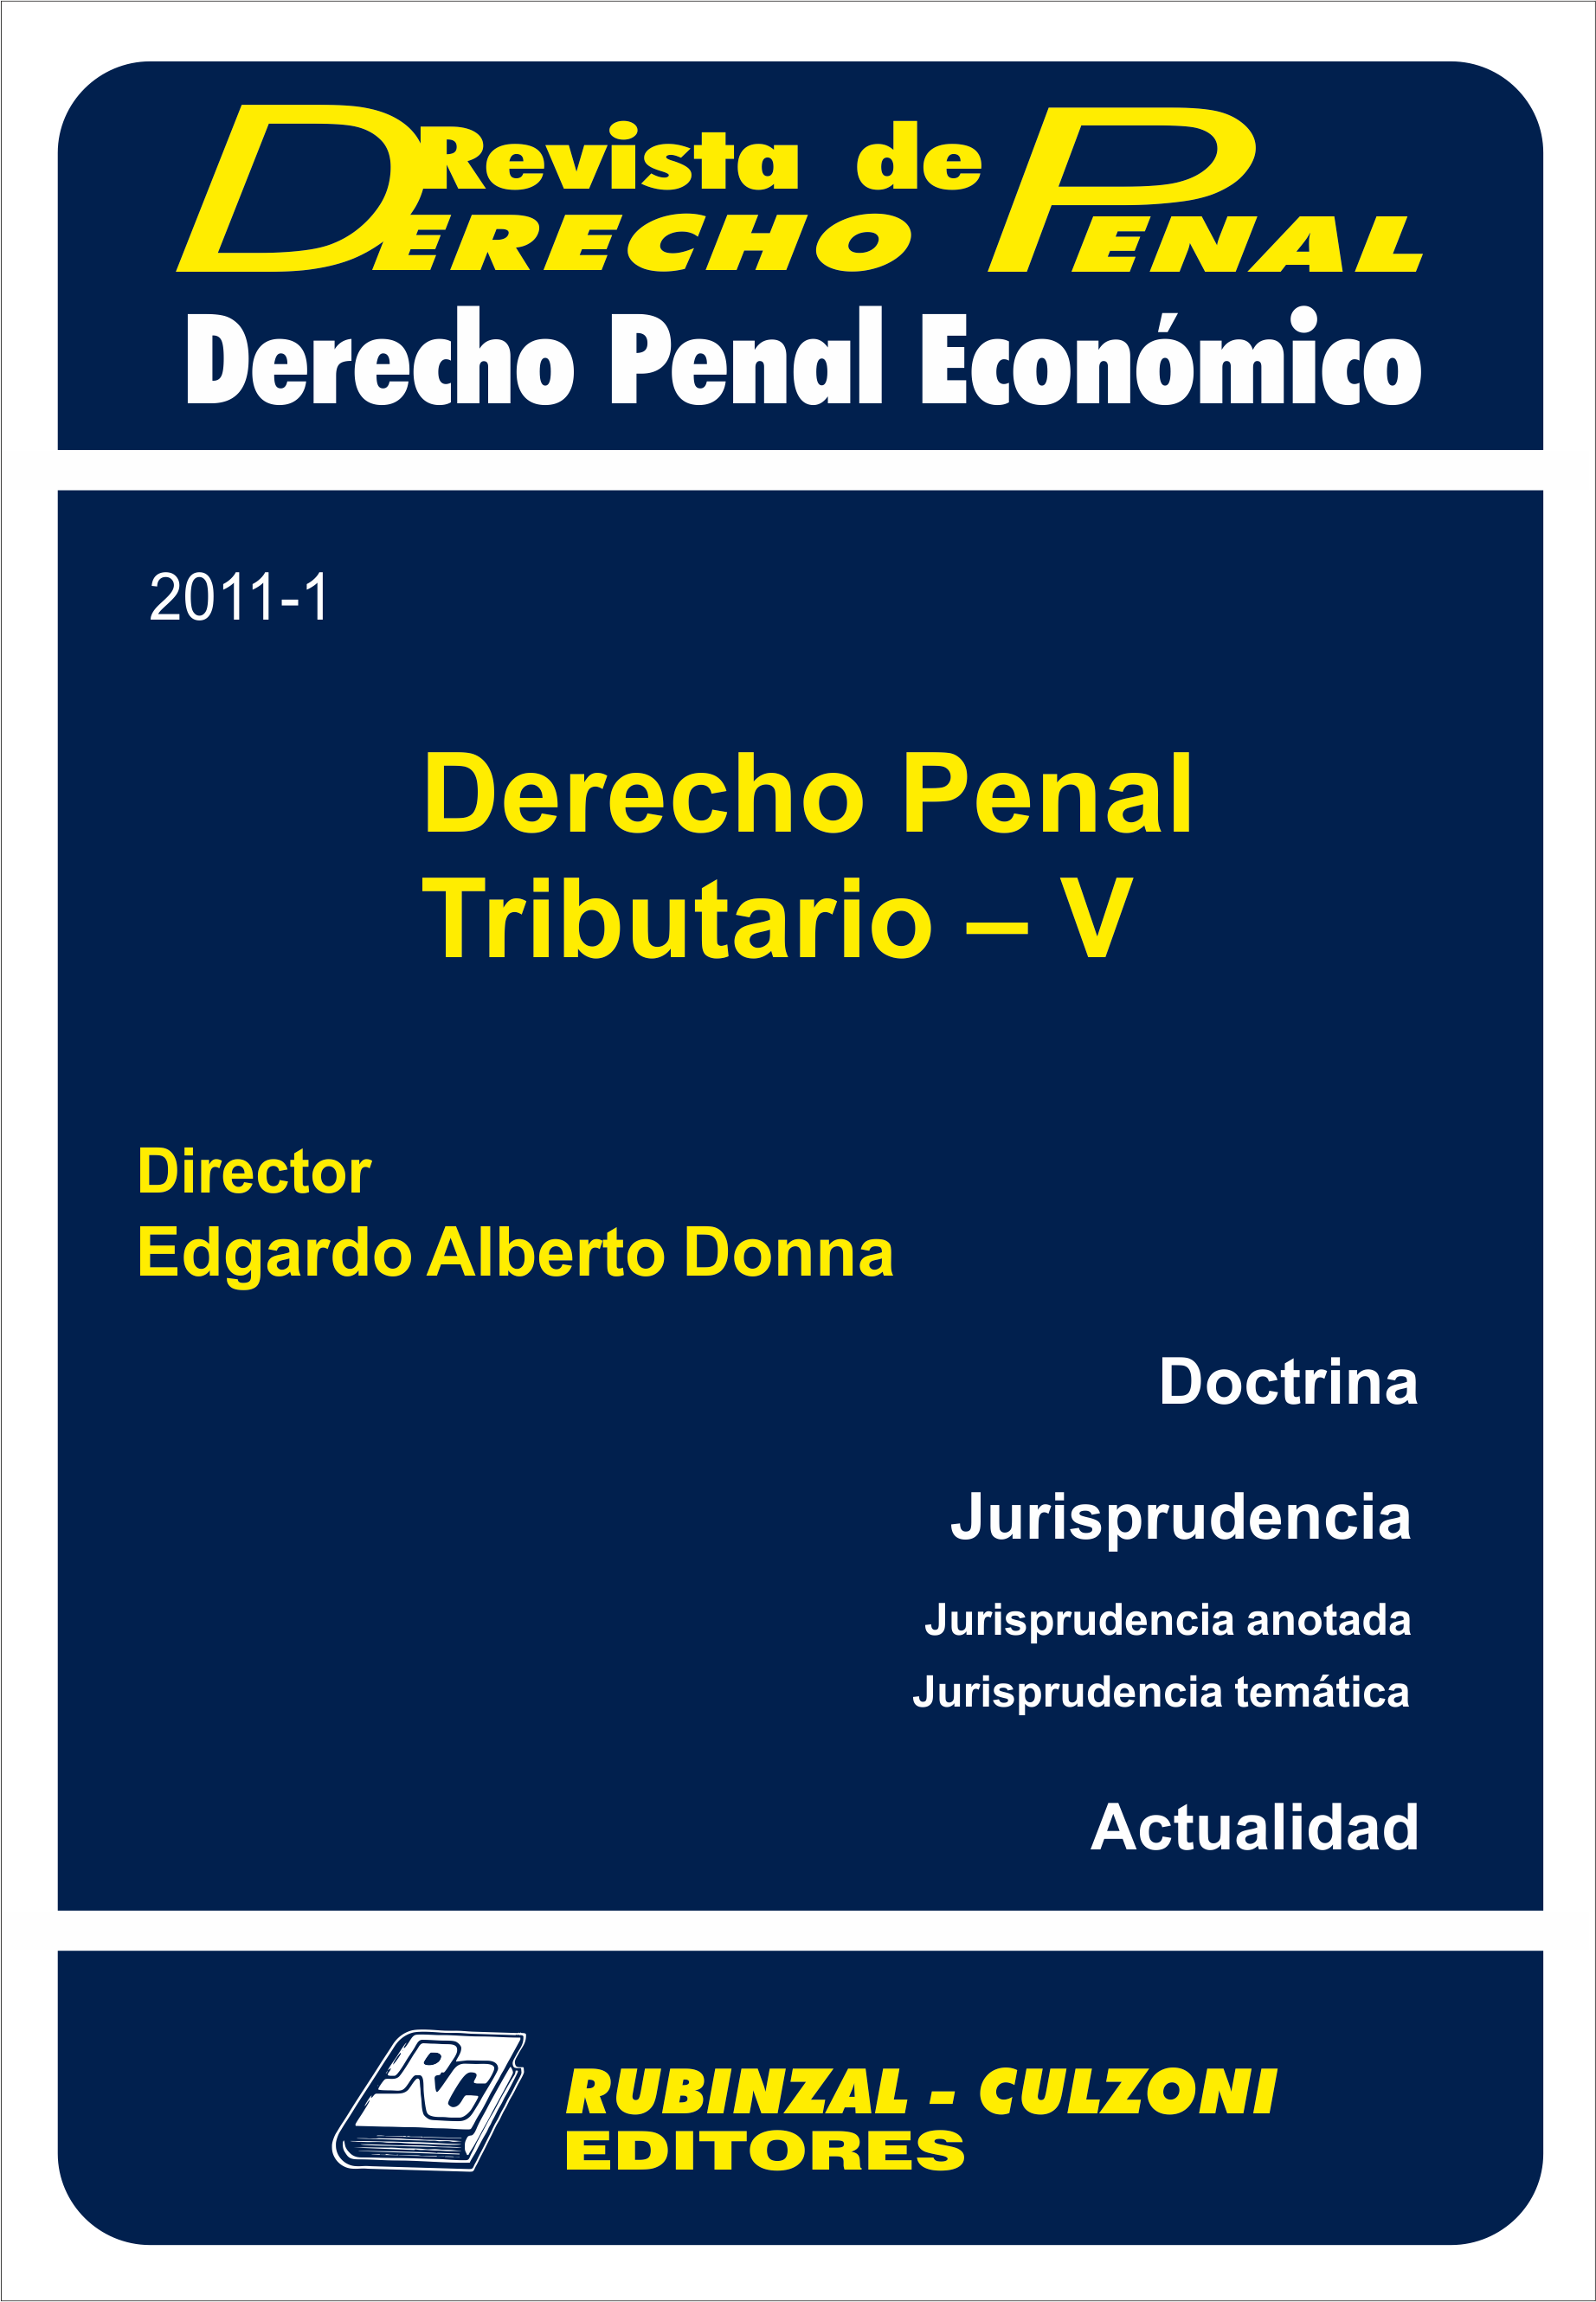 Derecho Penal Tributario - V. [2011-1]